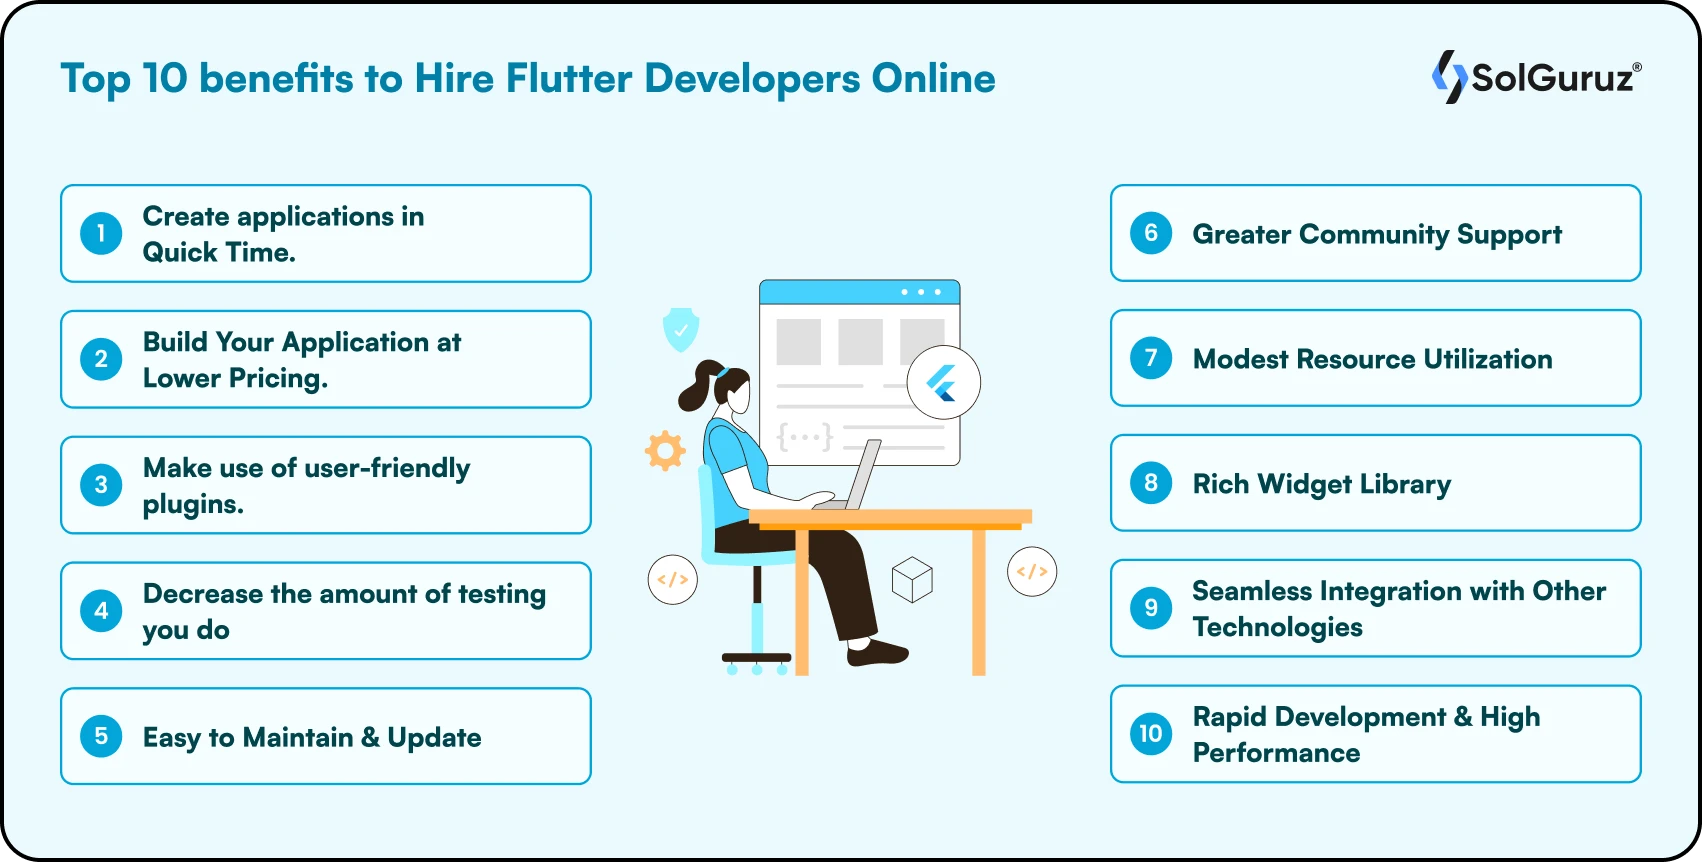 Top 10 benefits to Hire Flutter Developers Online